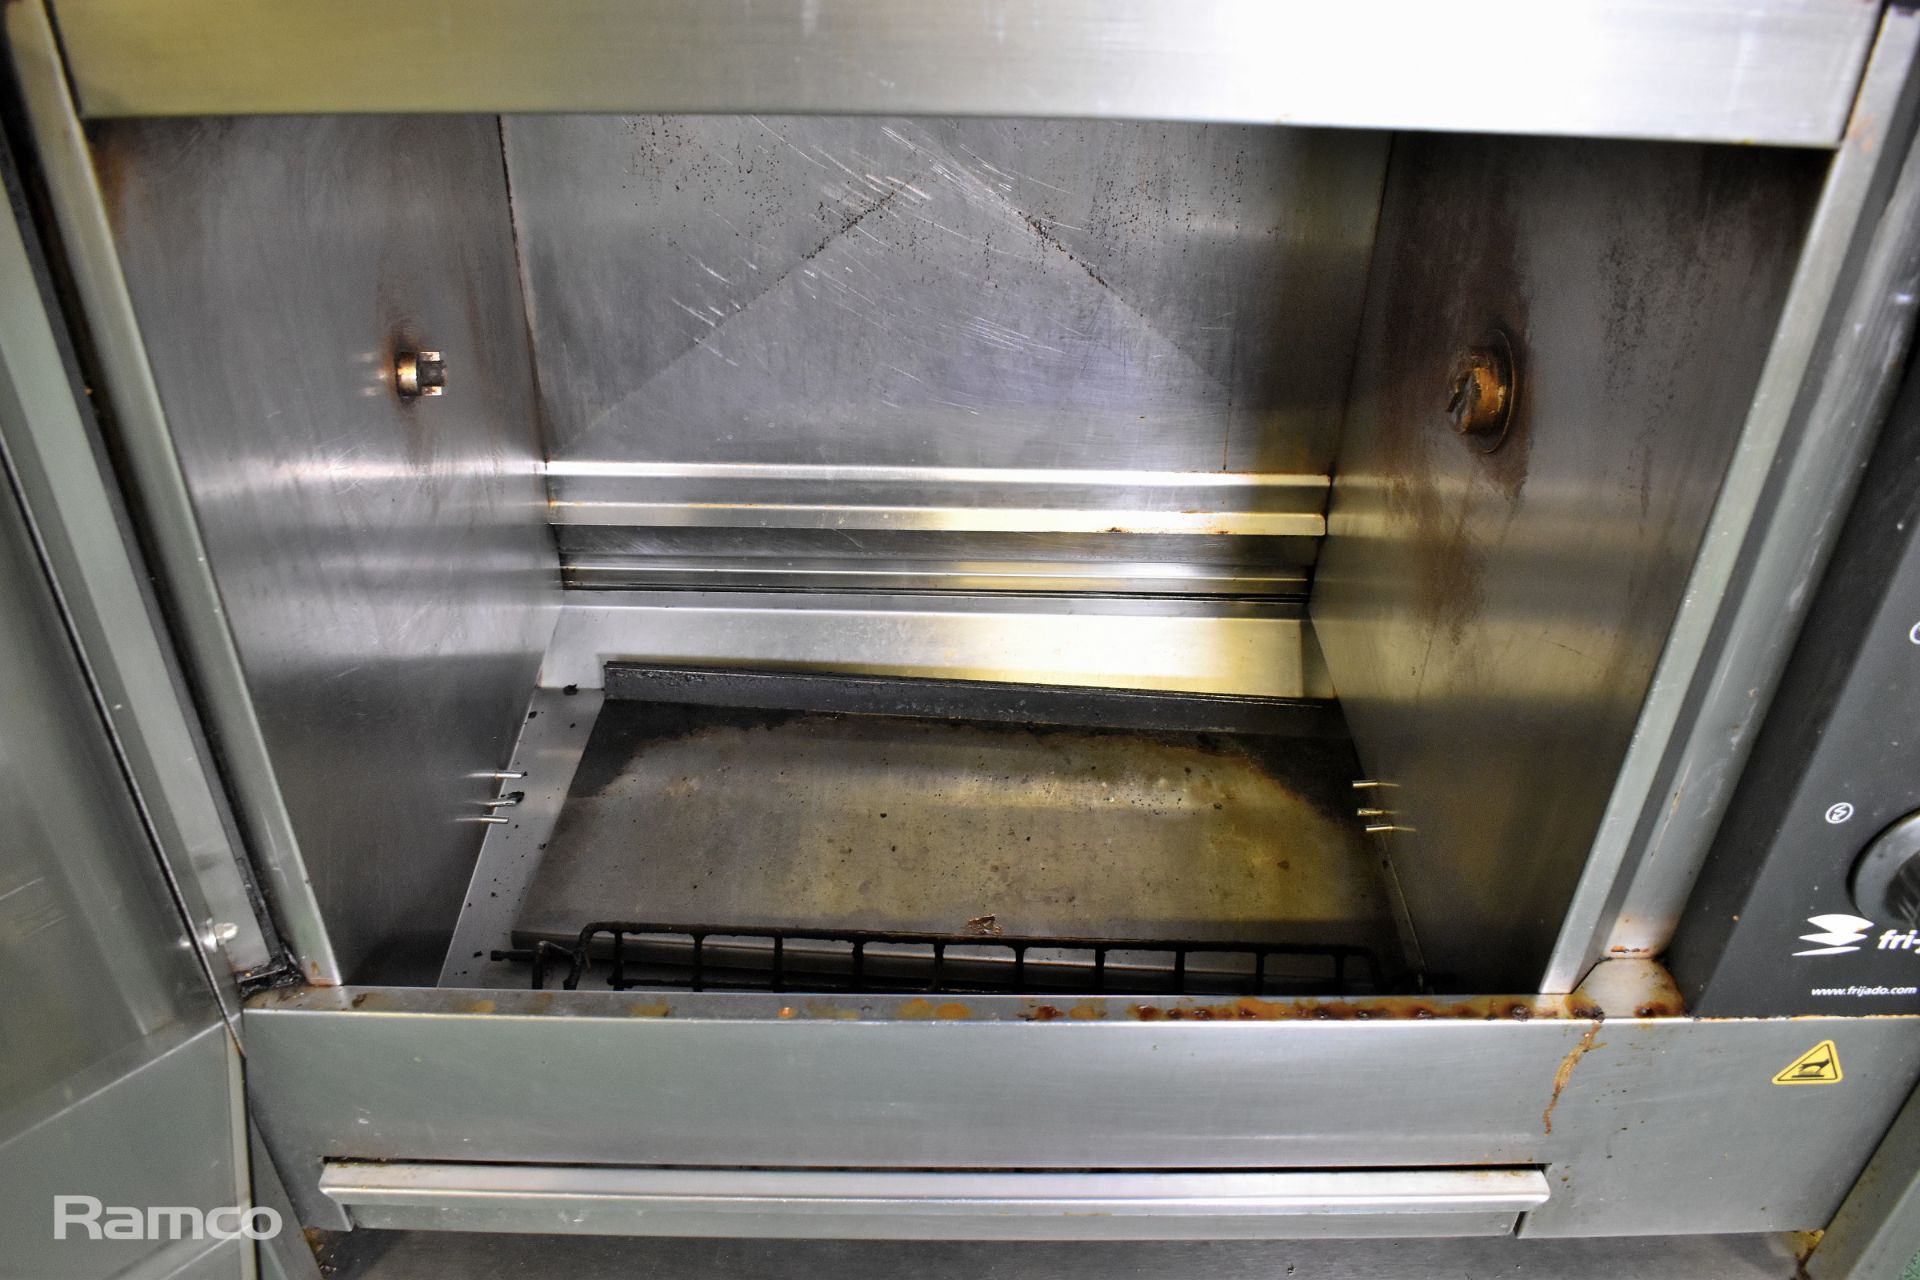 2x Fri-Jado TG110-M electric rotisserie ovens - 84 x 55 x 75cm, Stainless steel trolley - Image 5 of 6